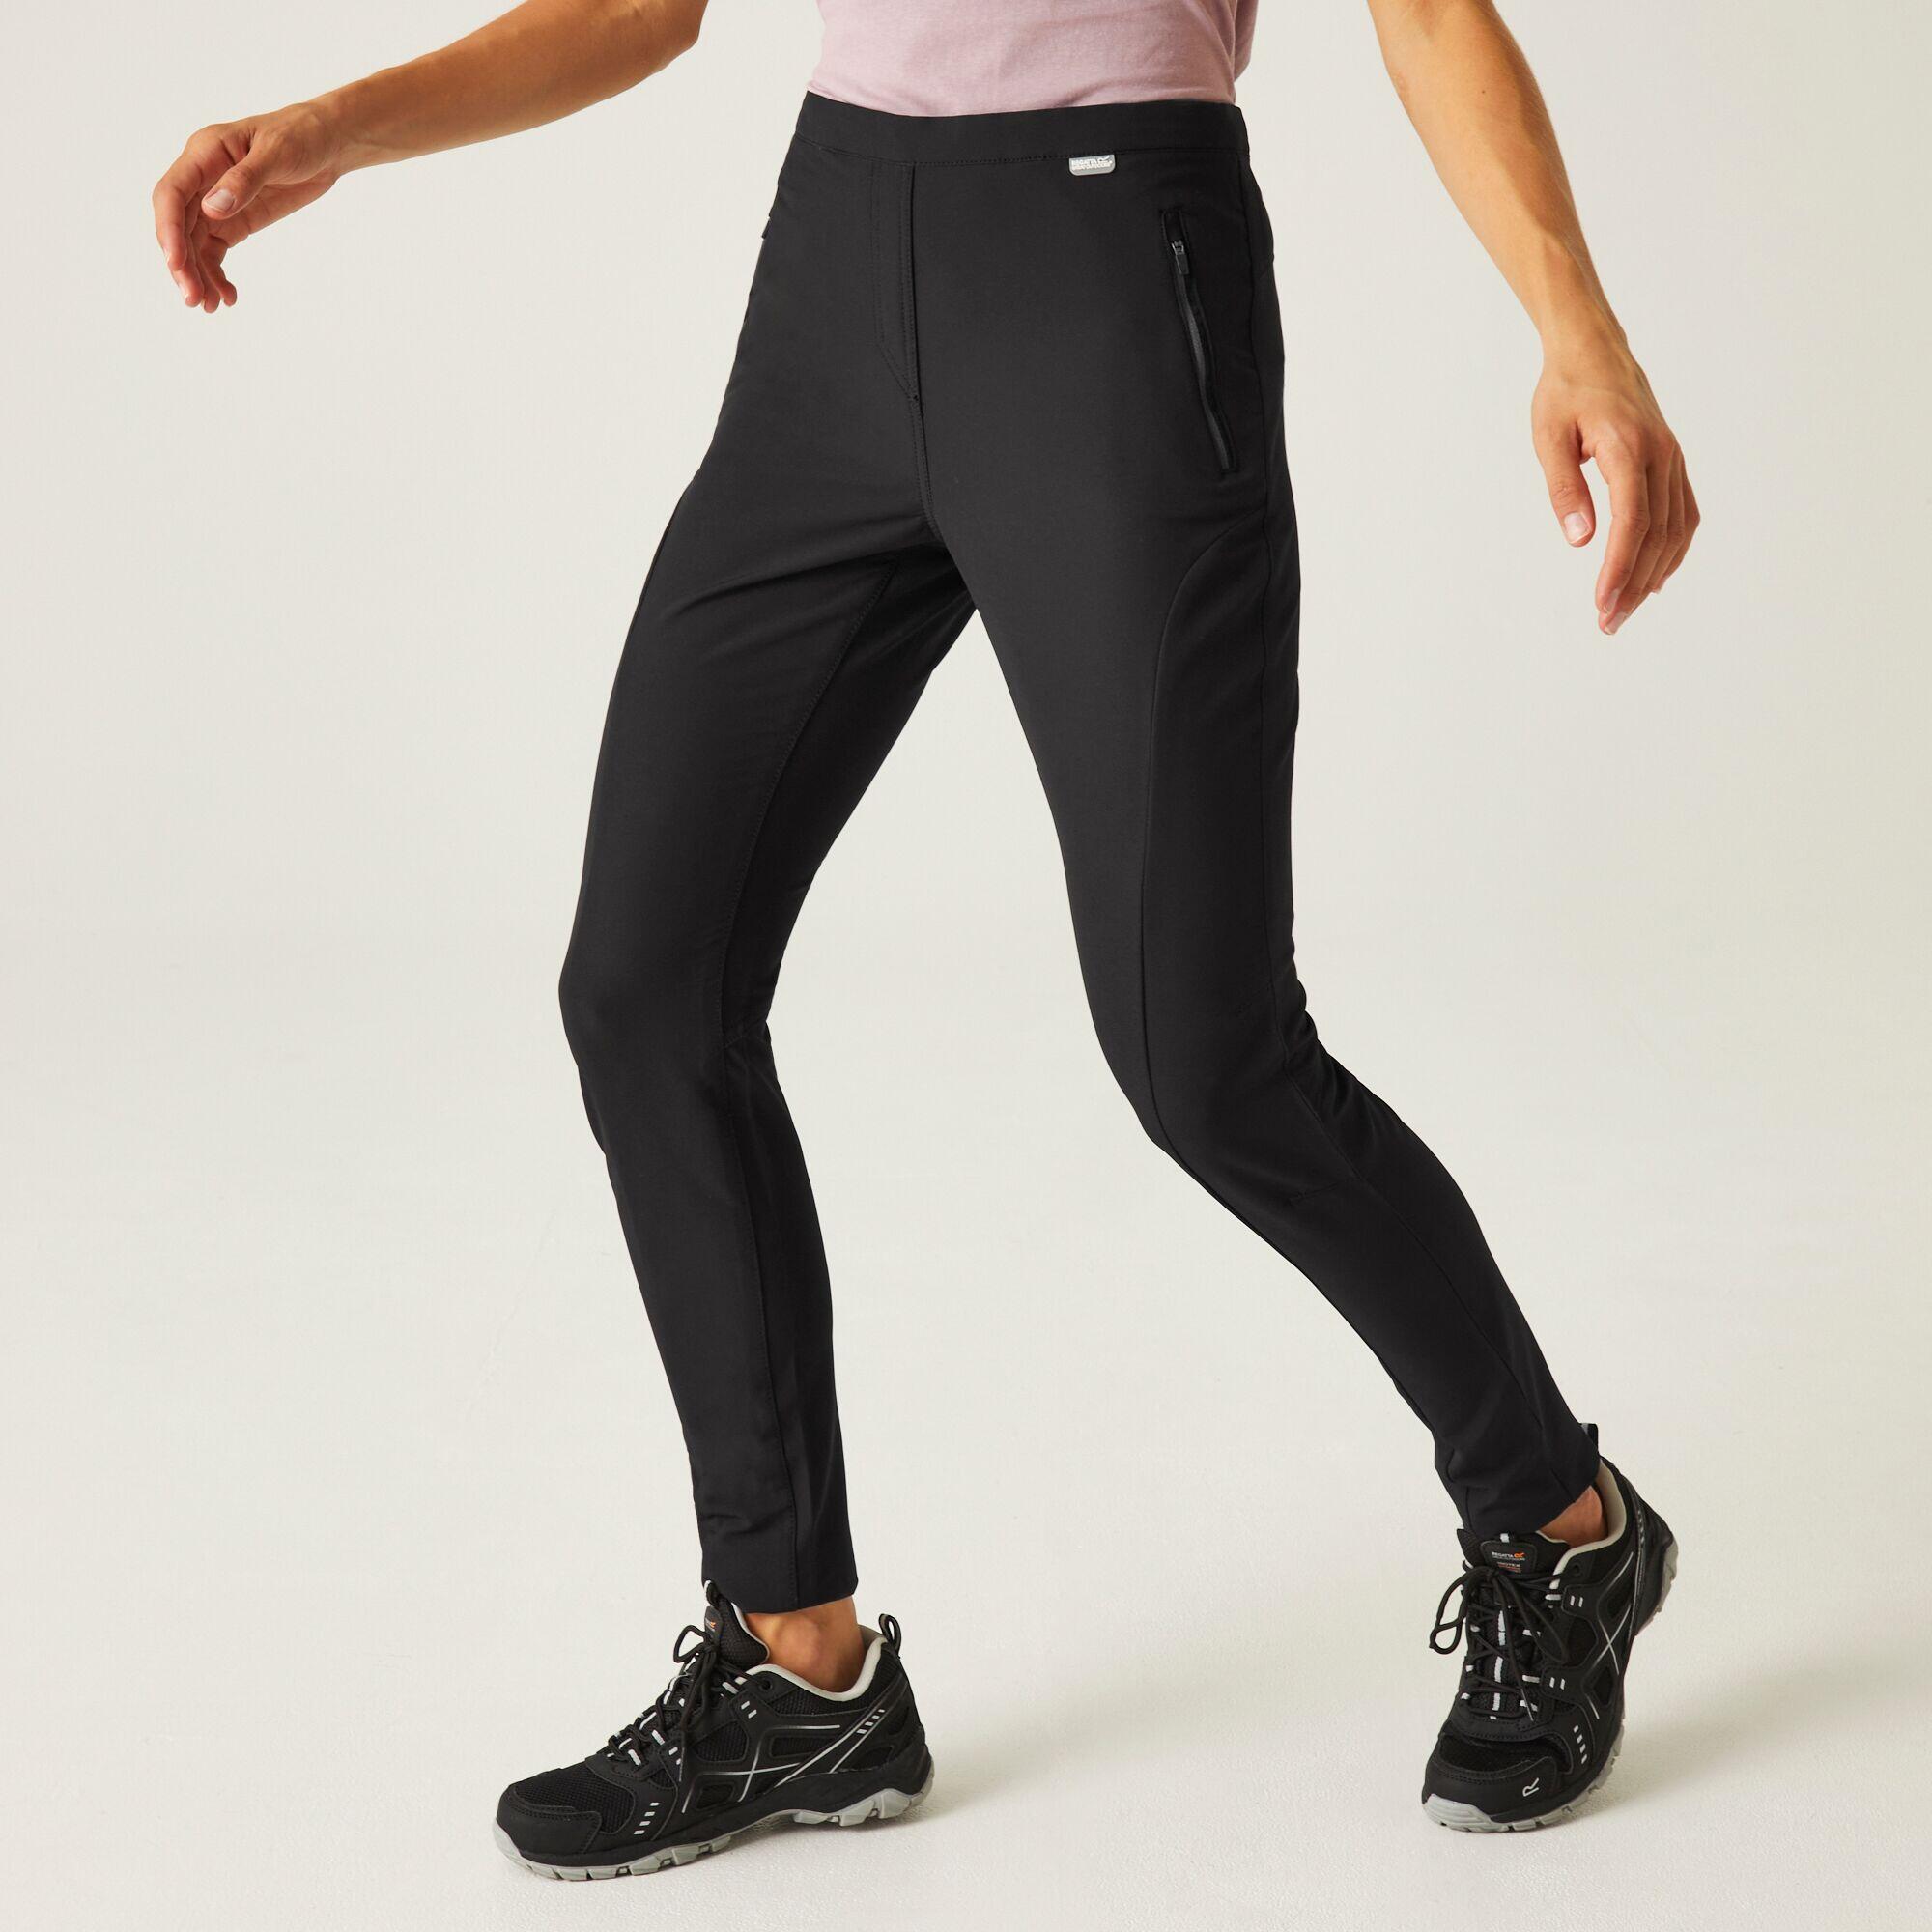 Pentre Stretch Women's Hiking Trousers - Black 1/5